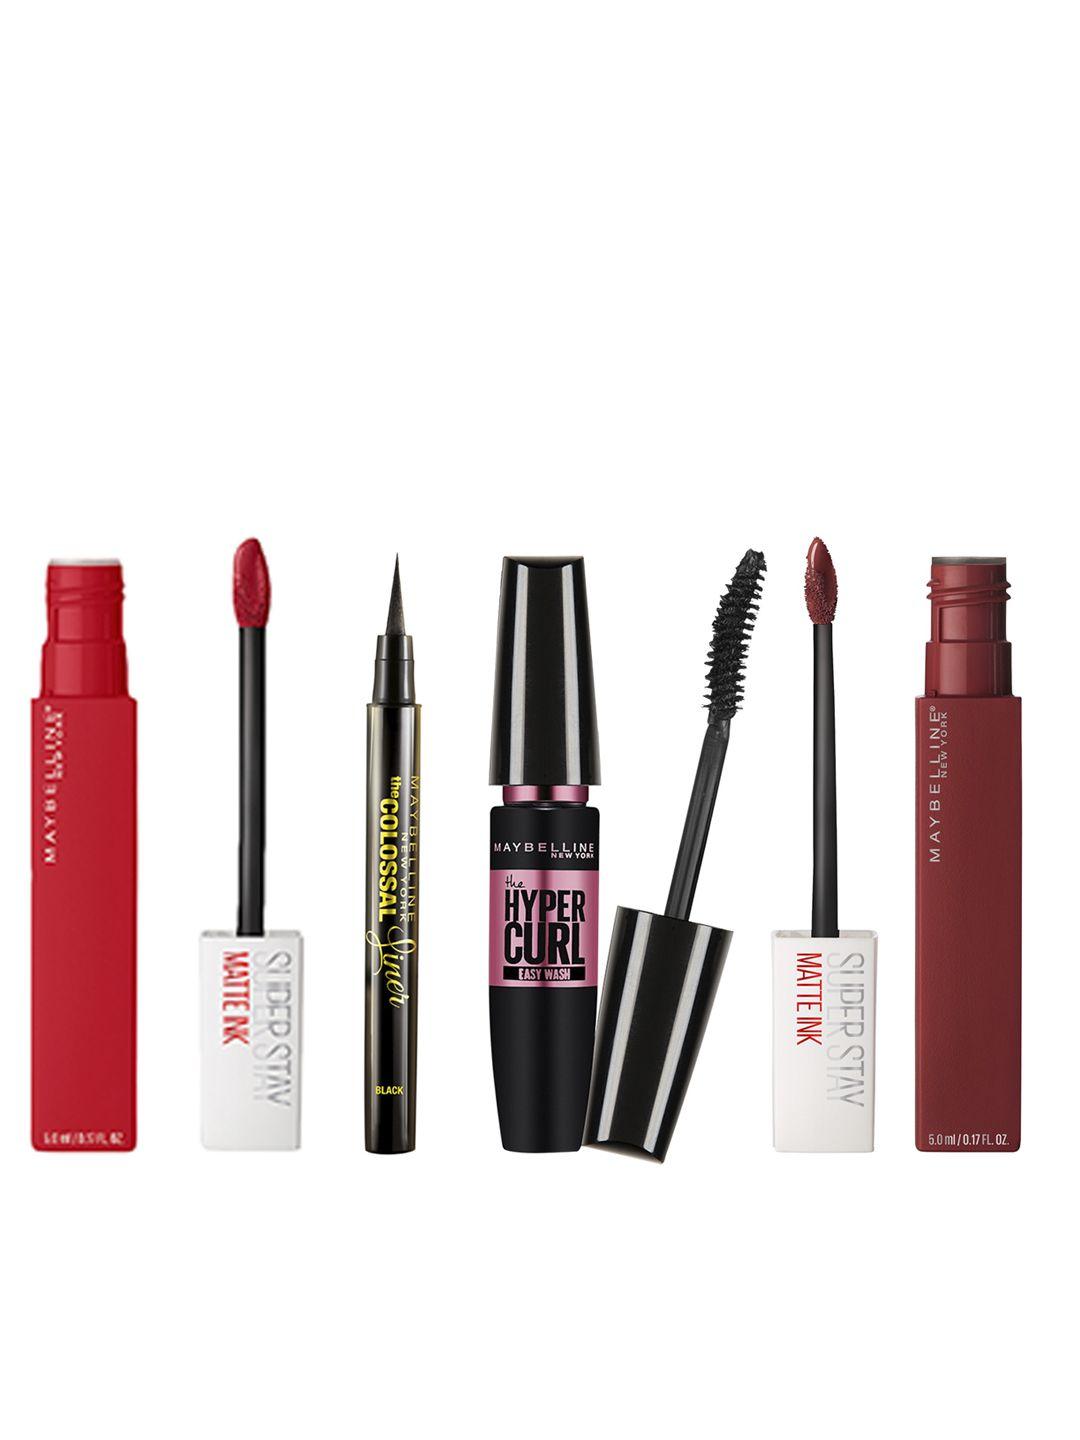 maybelline new york set of liquid lipsticks - hypercurl mascara - colossal liner